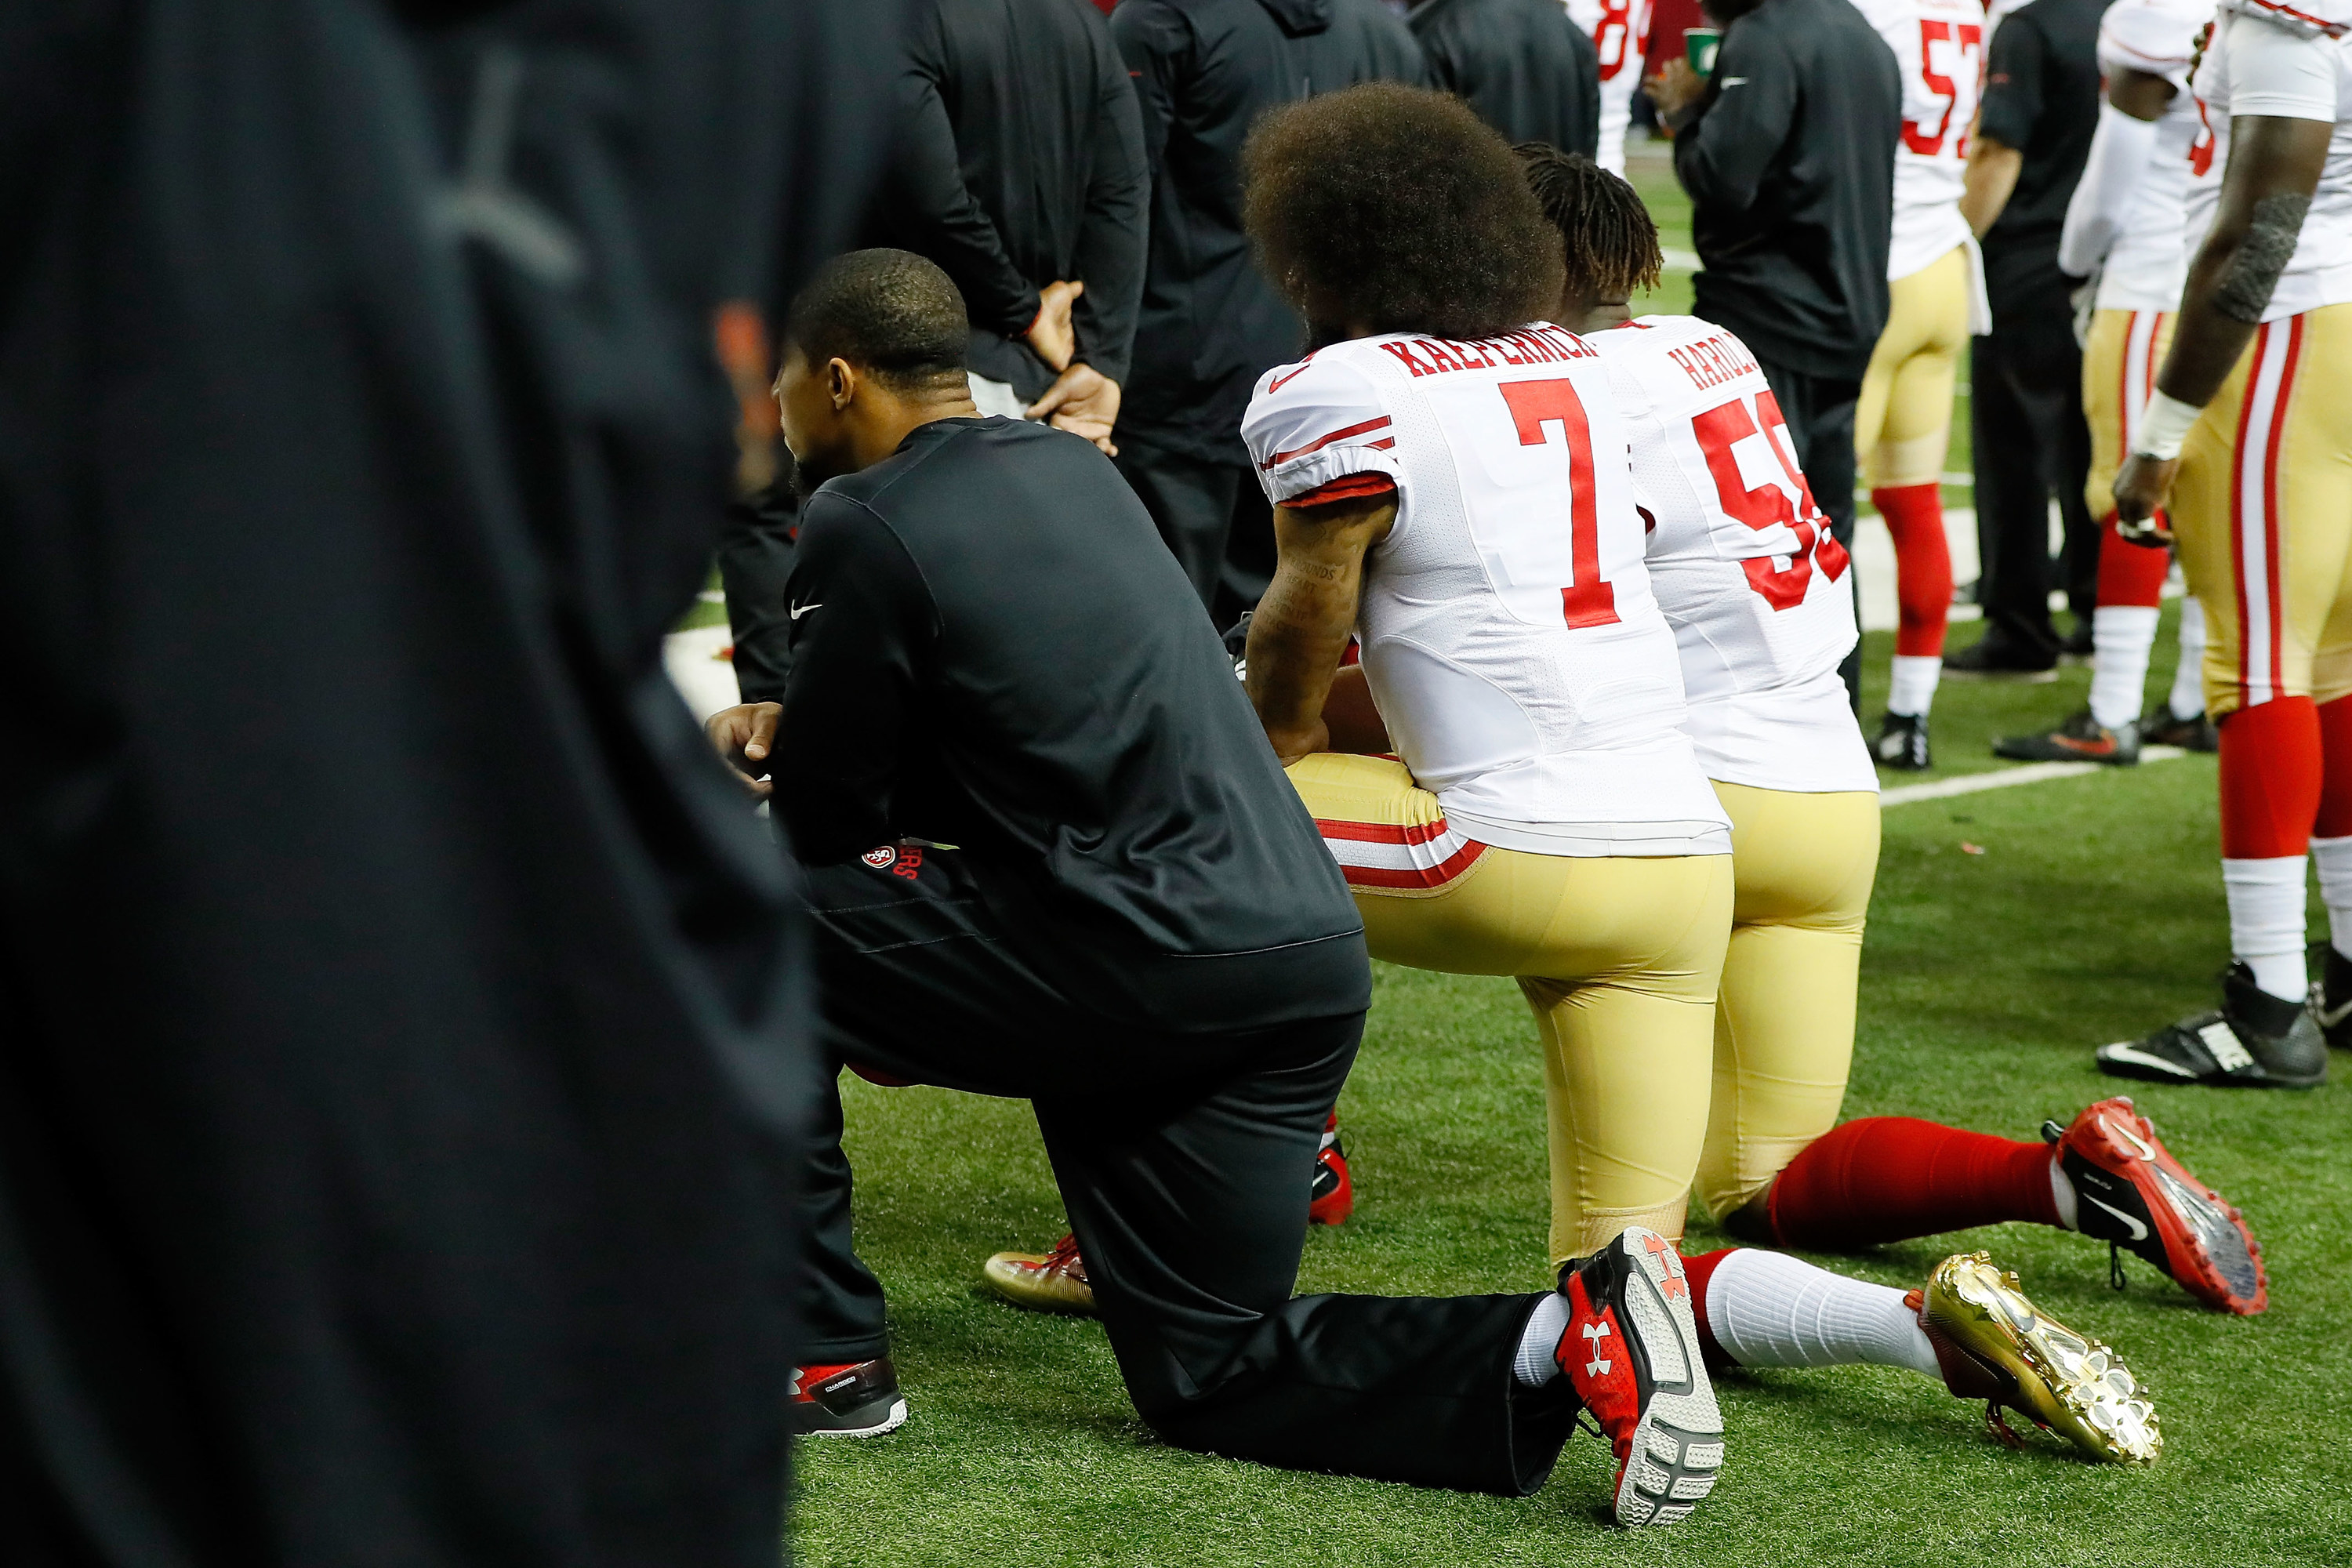 NFL players kneeling